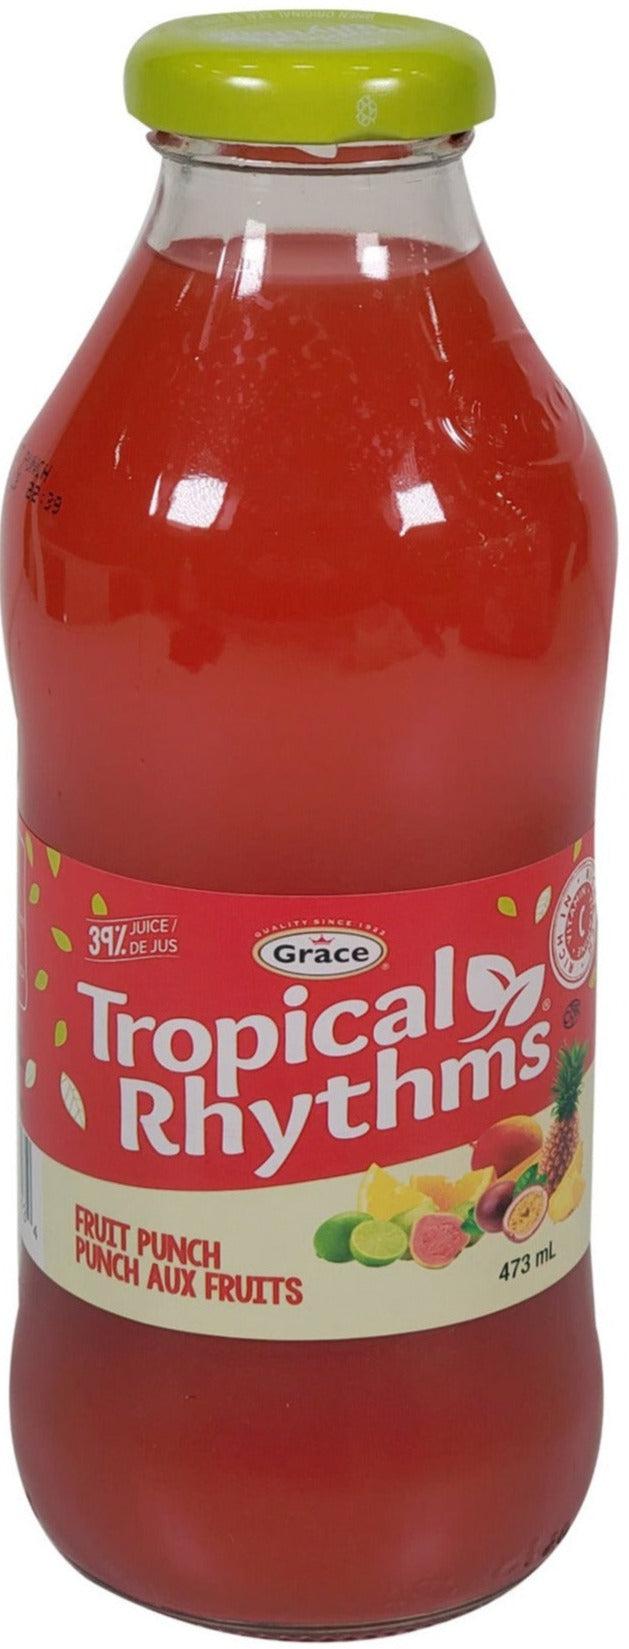 Grace - Tropical Rhythms - Fruit Punch - Bottles